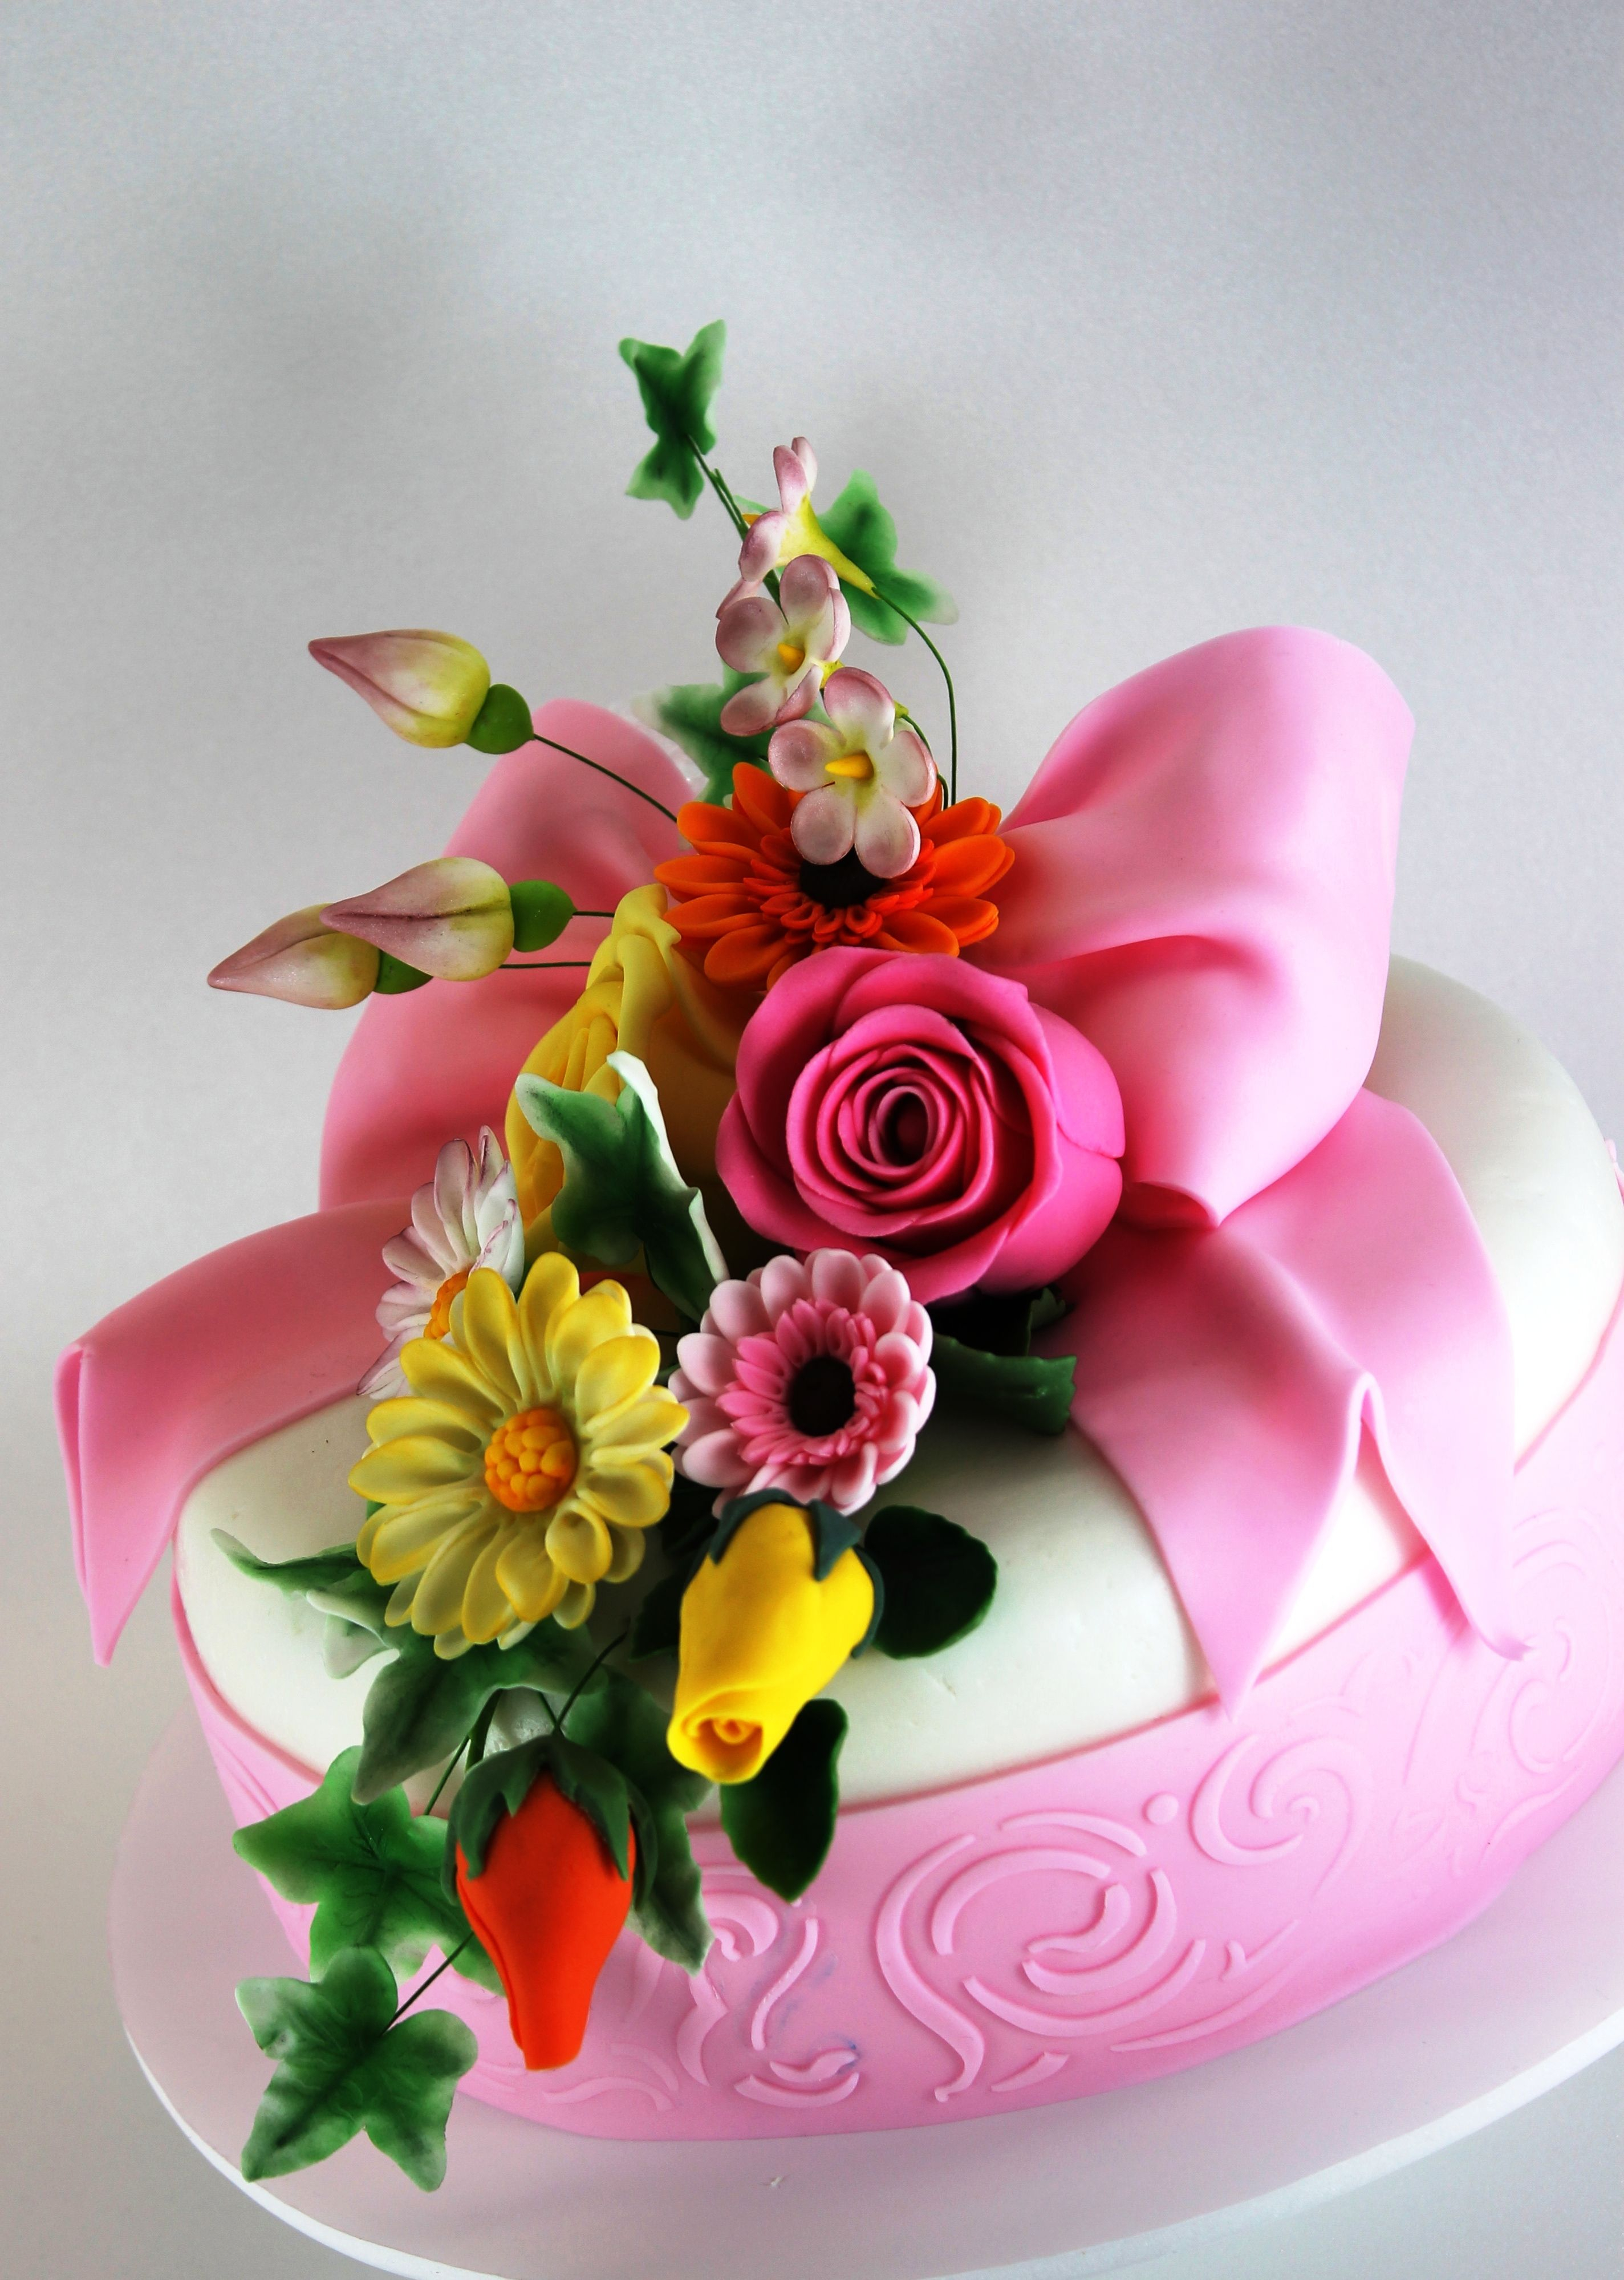 Happy Birthday Cake And Flowers Beautiful Birthday Cake Today December 27th Happy Birthday Mom